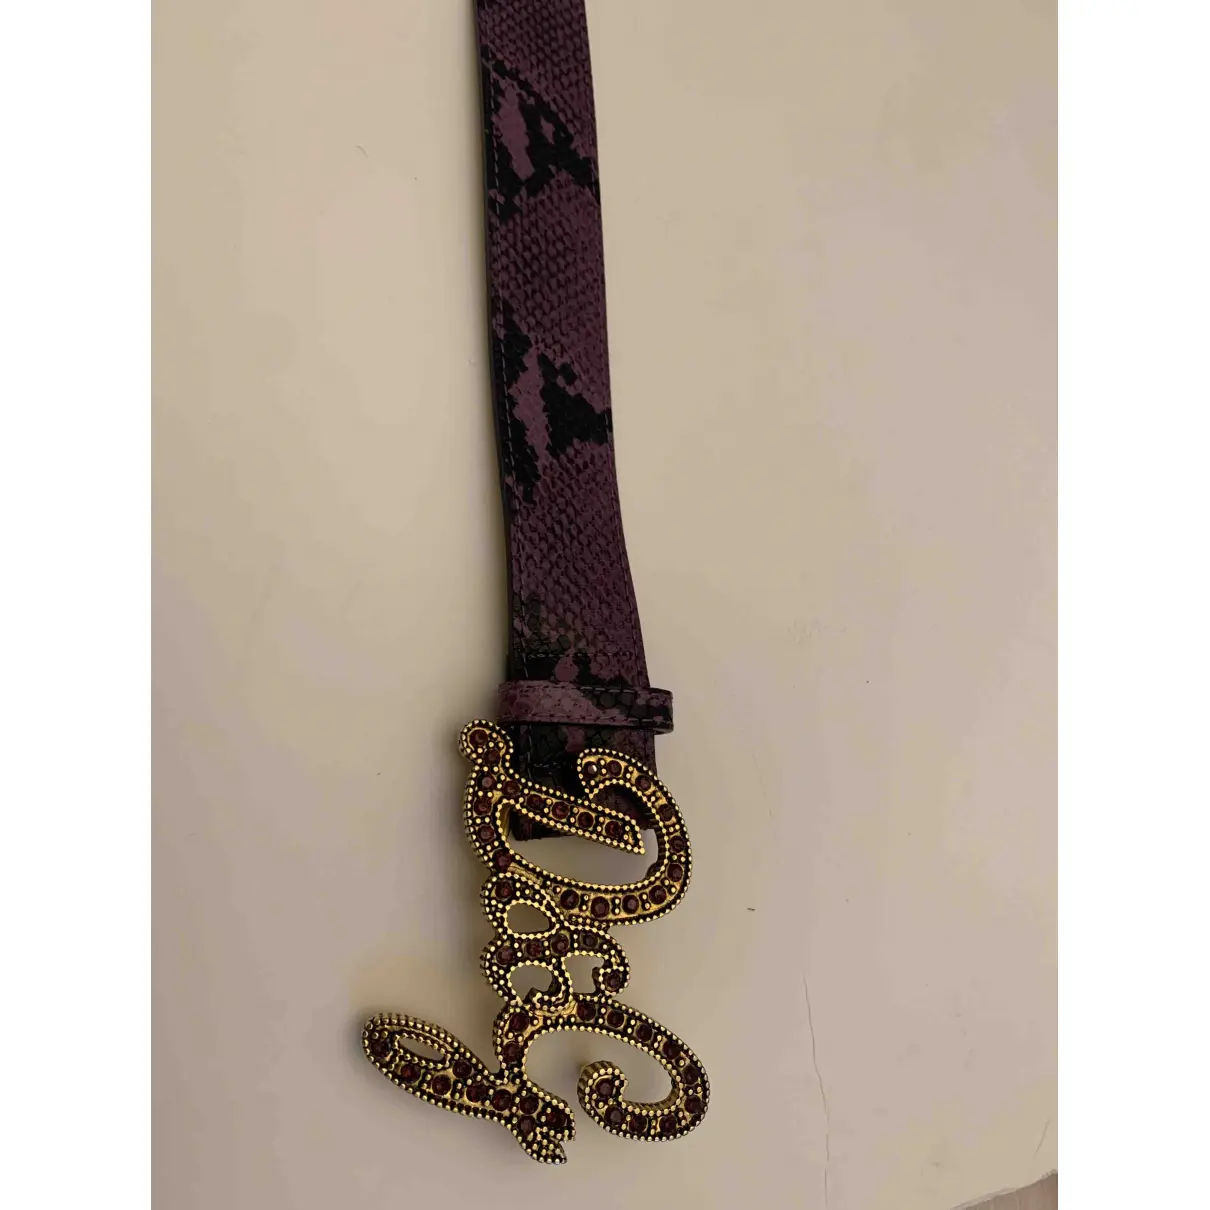 Buy D&G Python belt online